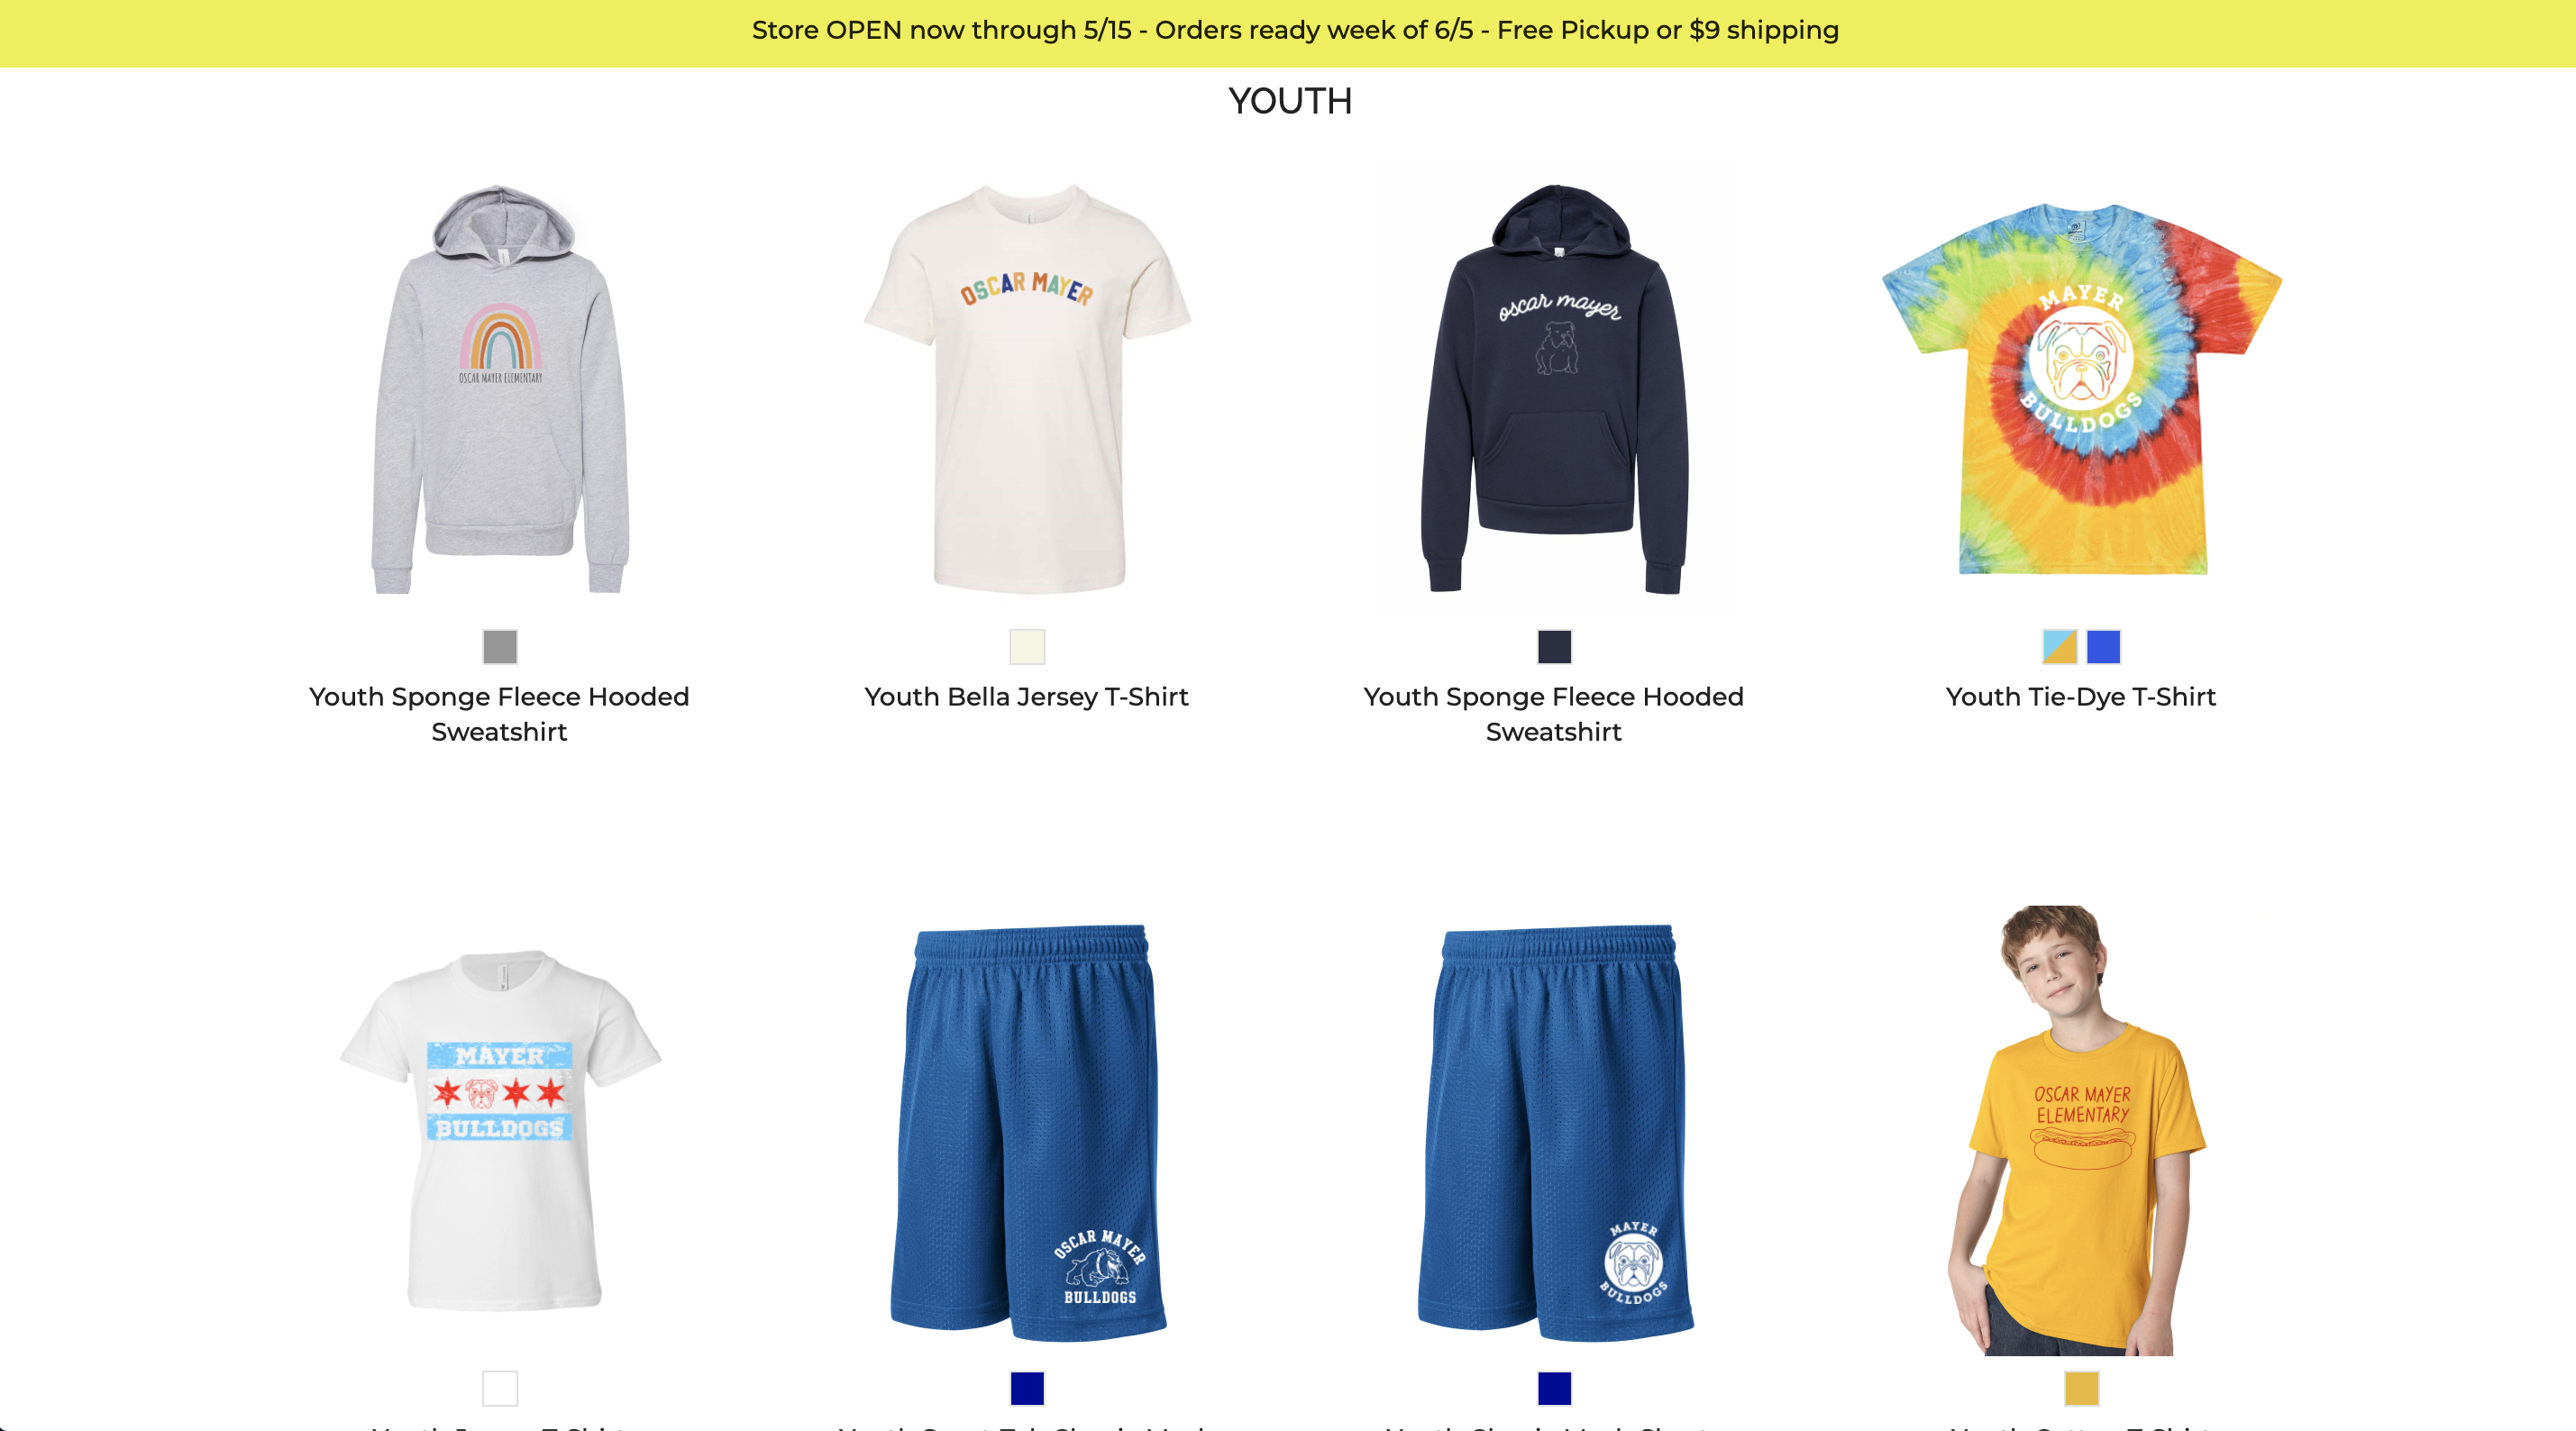 school spirit shirts and PE uniforms